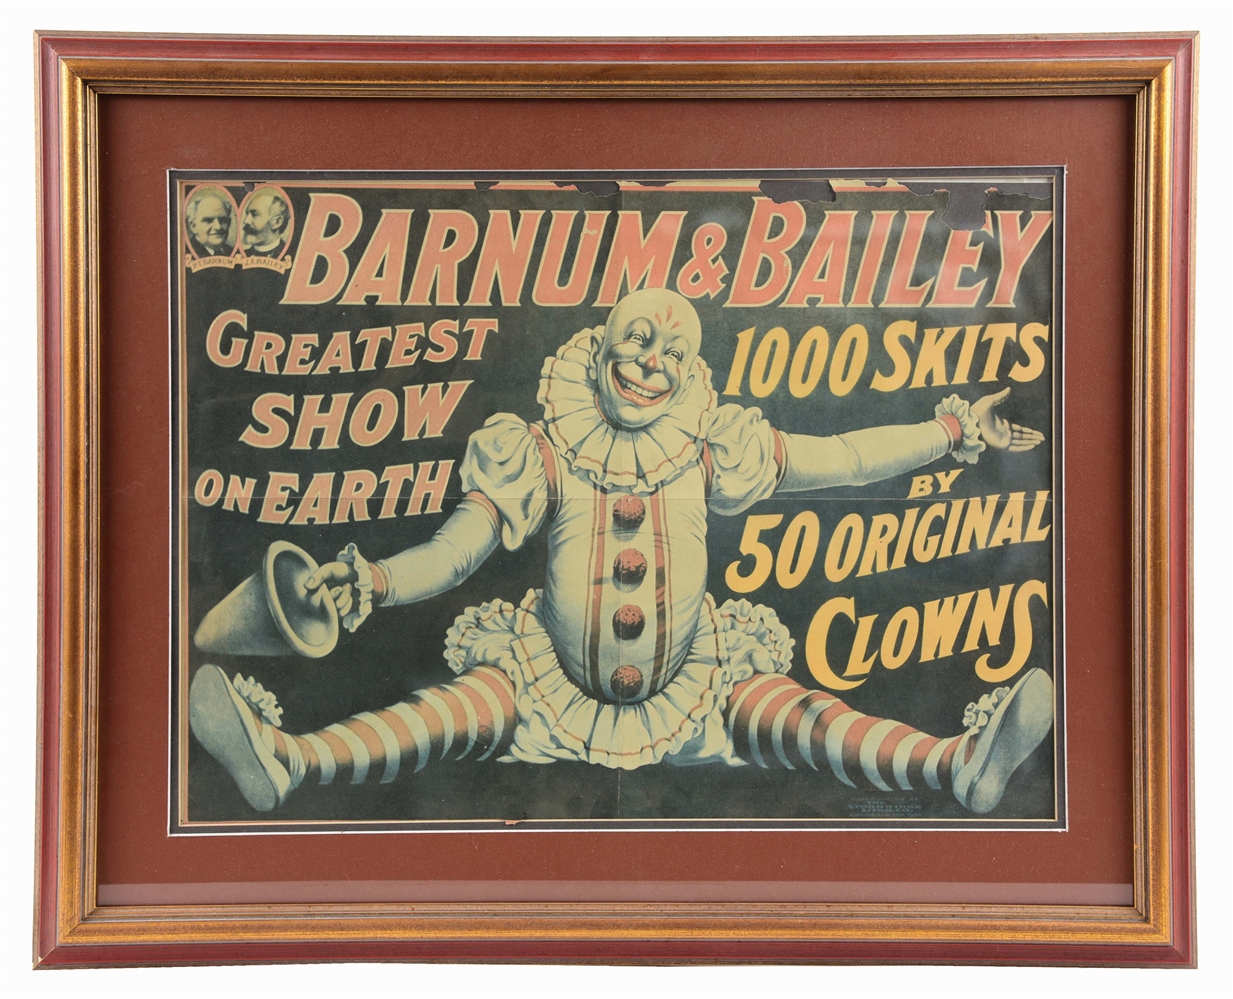 FRAMED ADVERTISEMENT FOR BARNUM & BAILEY CIRCUS.